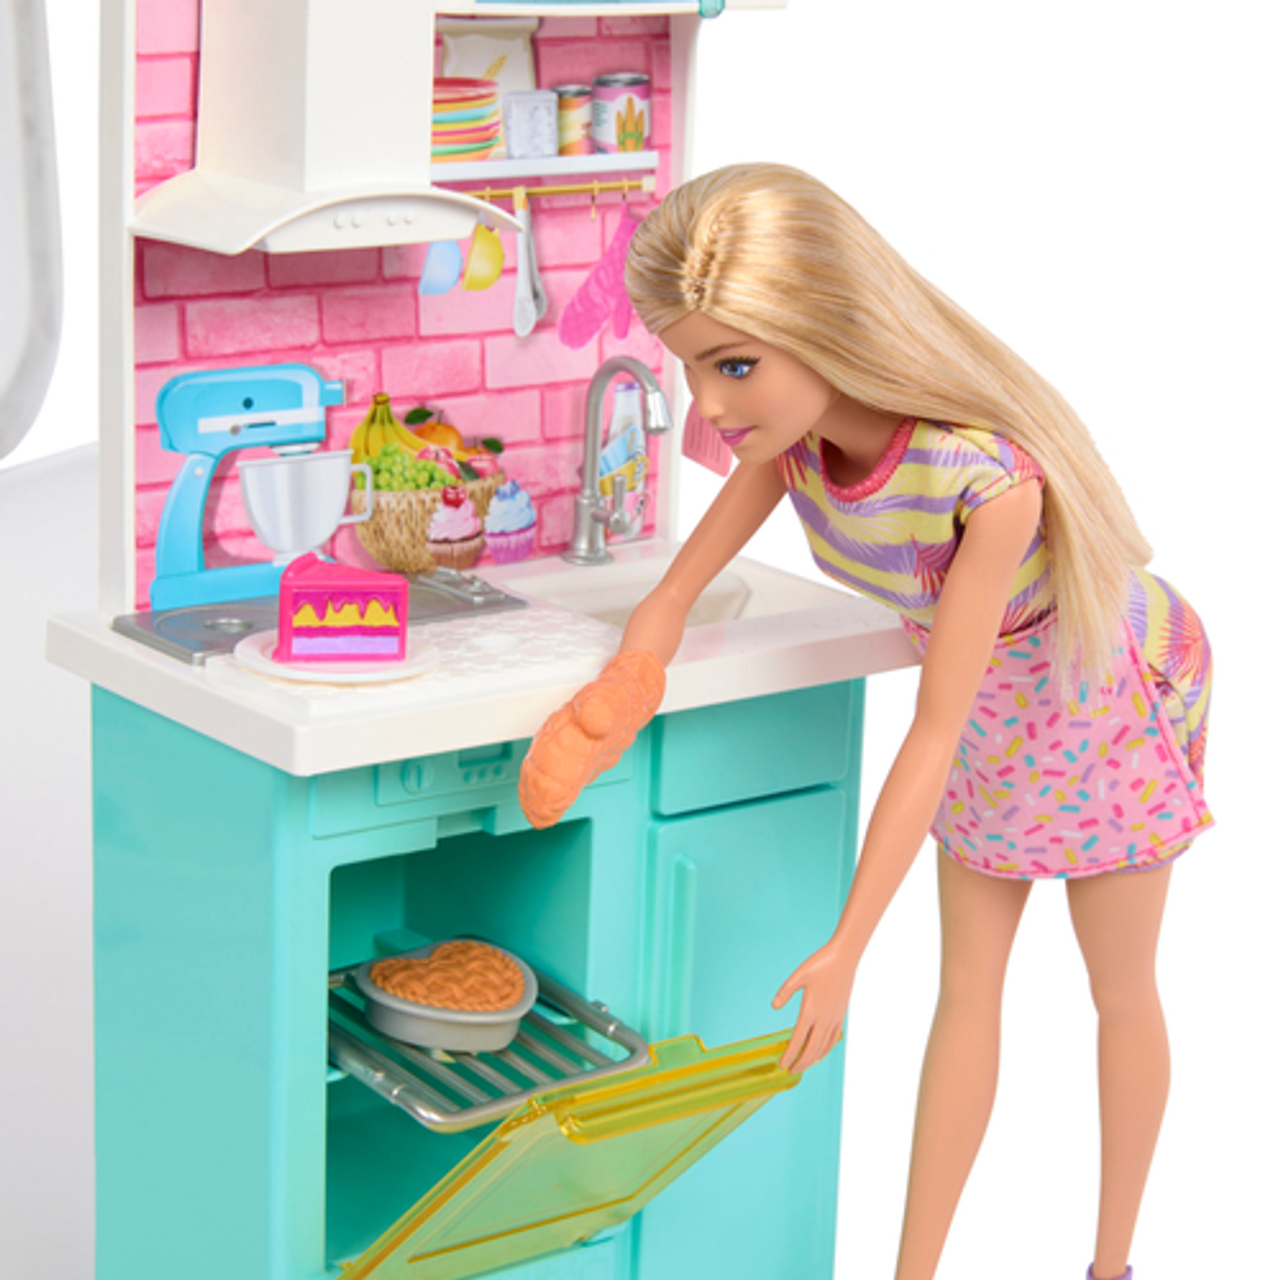 Barbie - Celebration Fun Baking & Kitchen with Dolls Playset